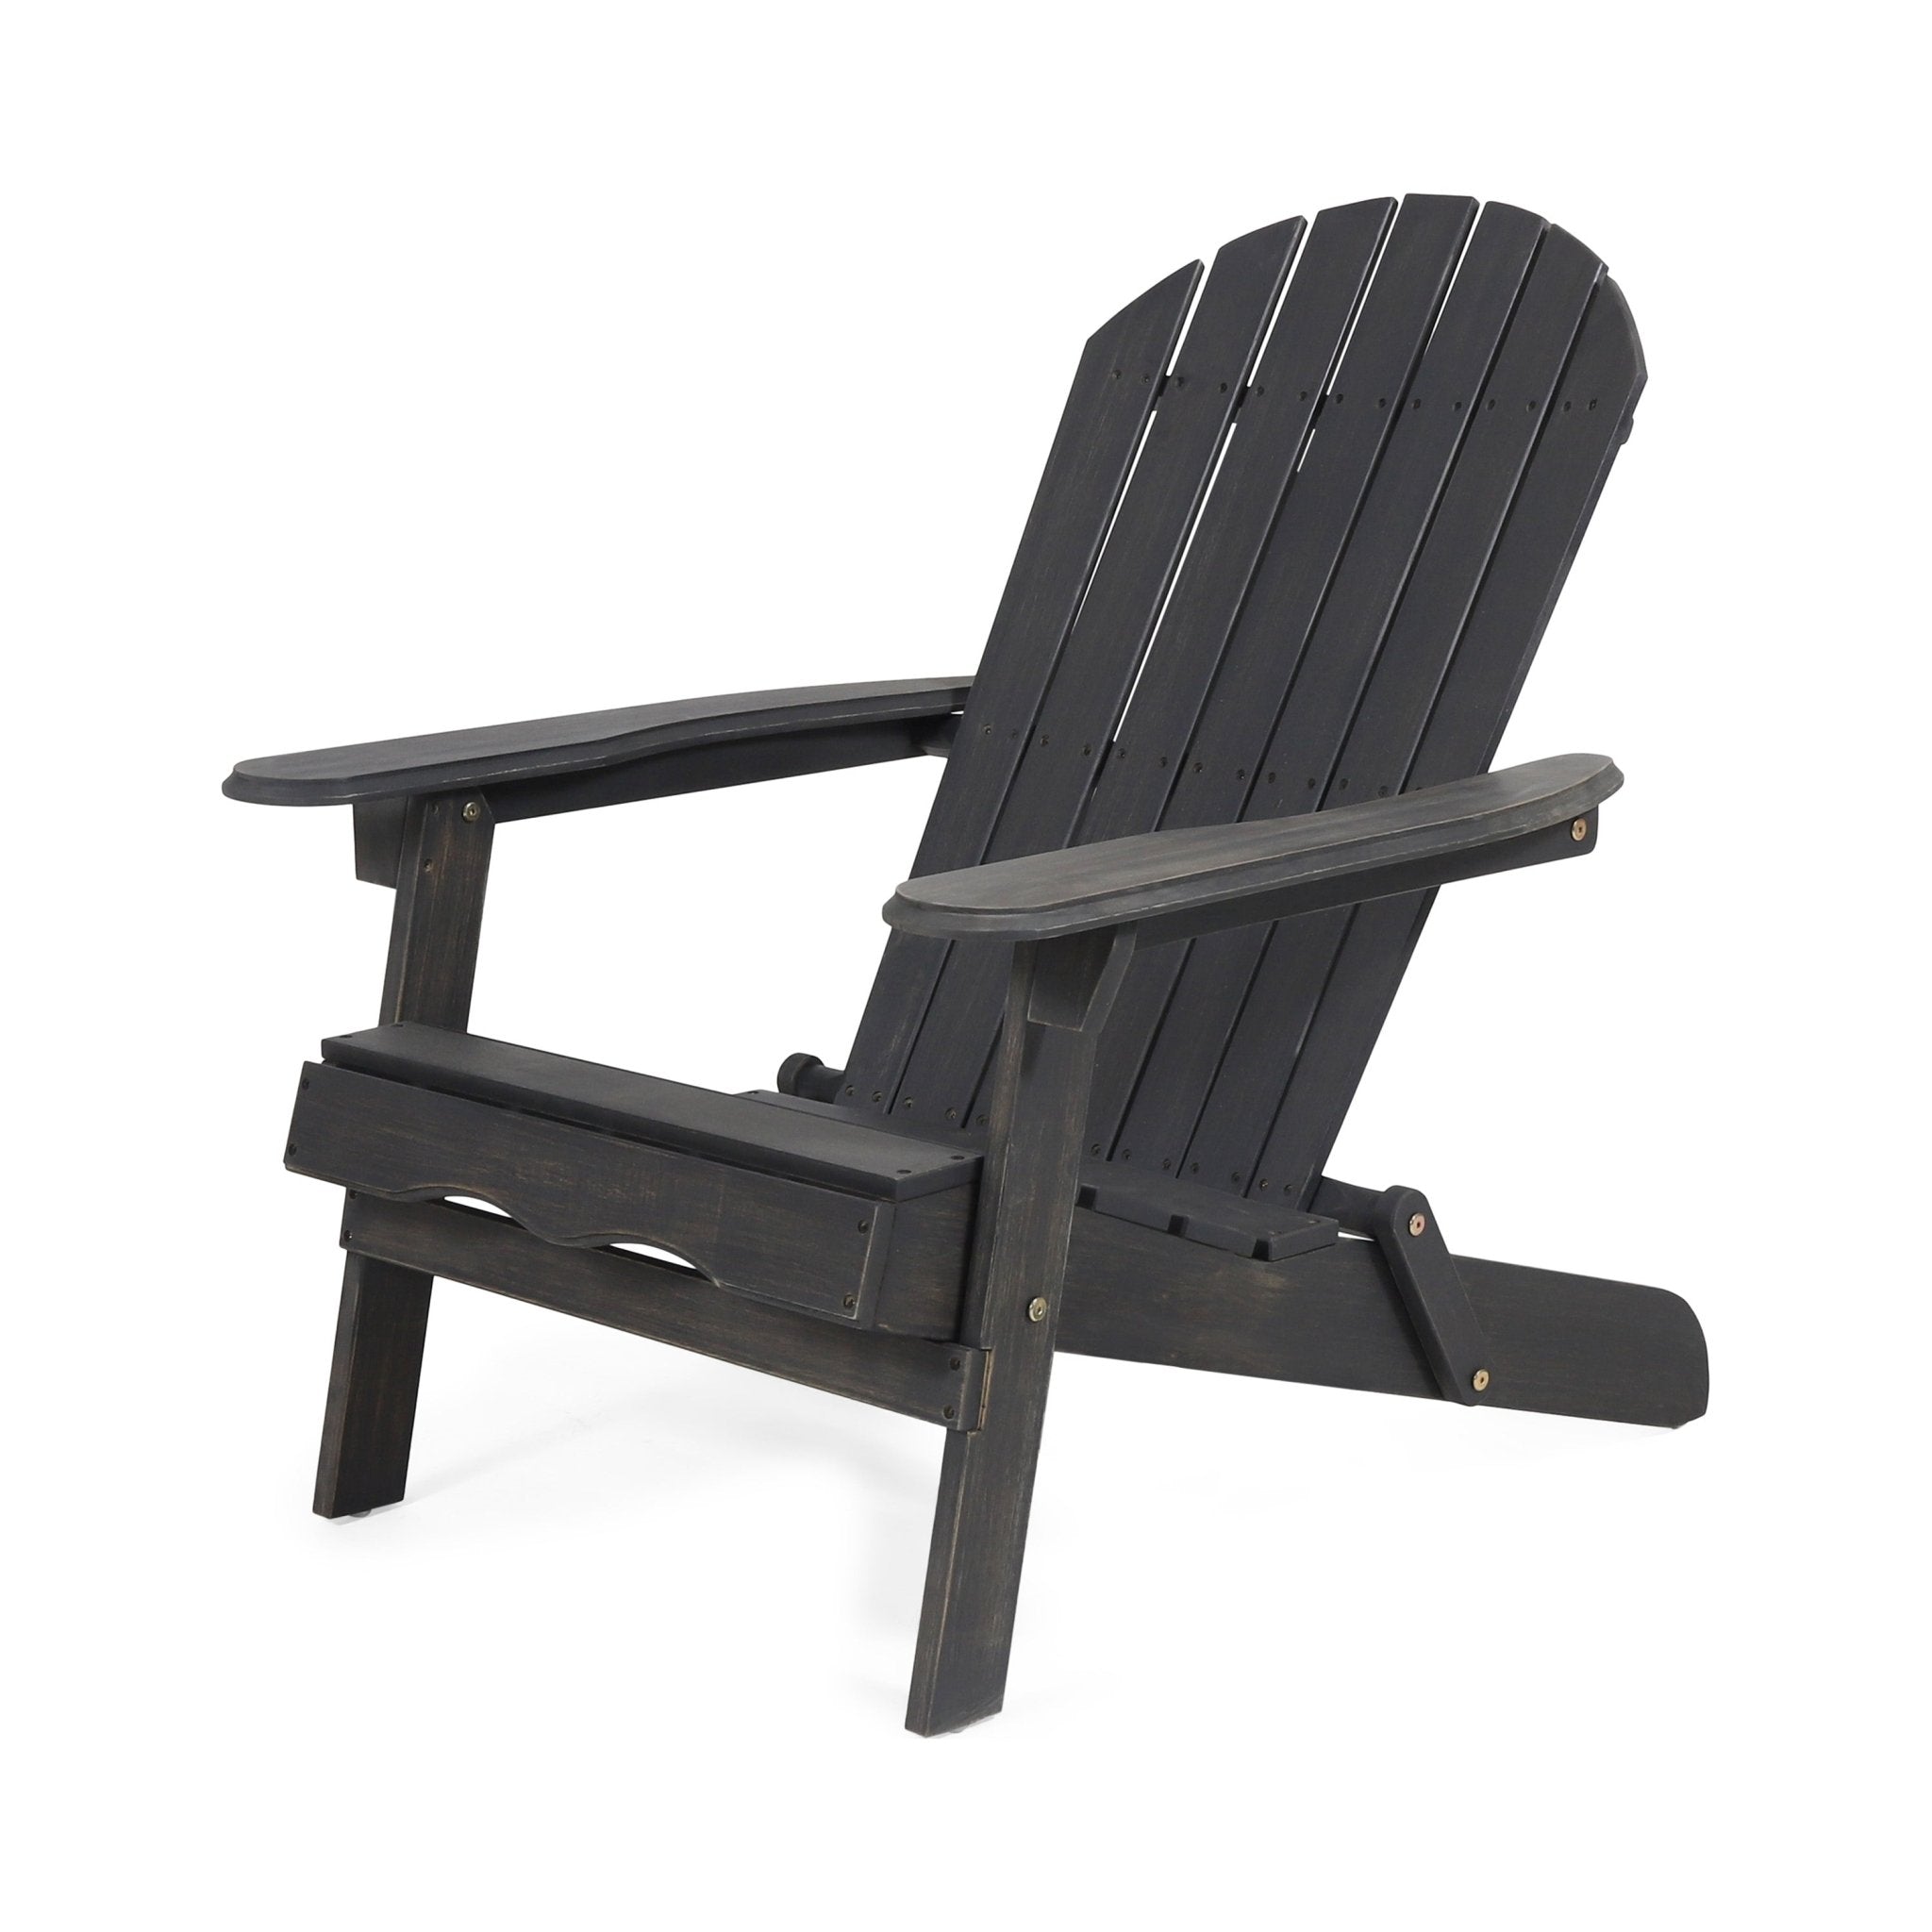 Dawn Outdoor Adirondack Chair with Slat Back and Acacia Wood Frame, Dark Grey